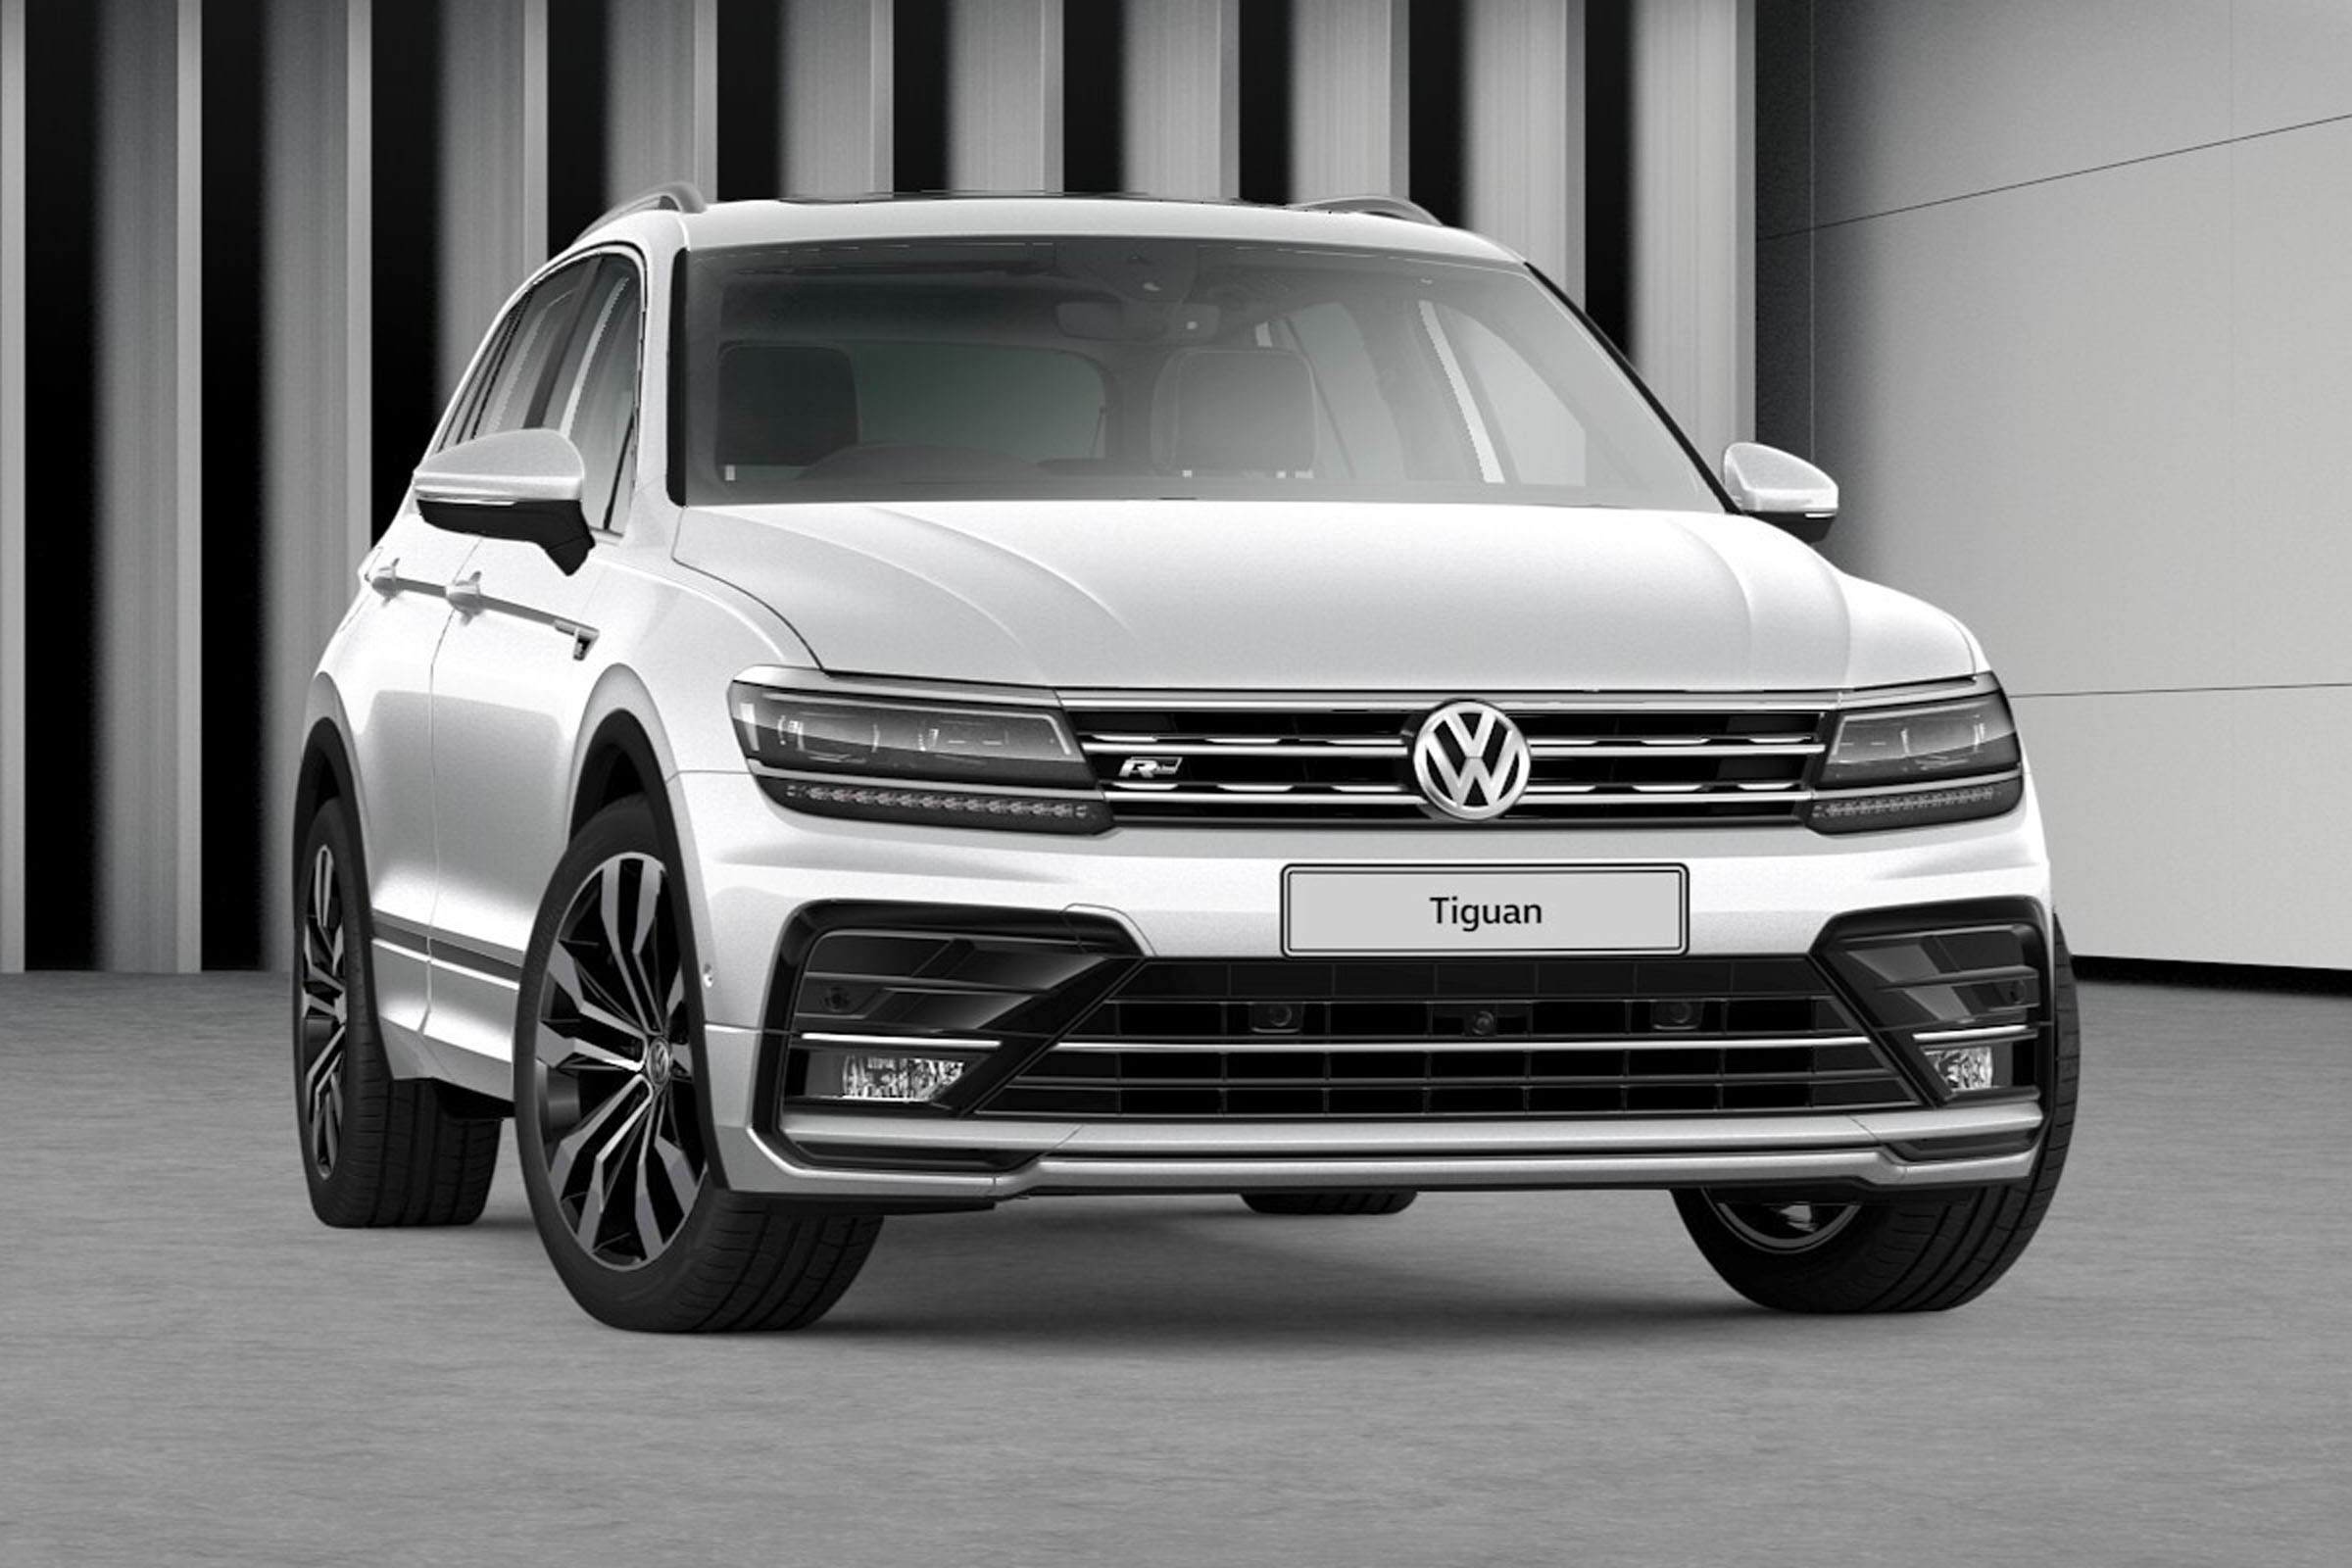 Volkswagen Tiguan SUV gets new trim levels for 2019 Carbuyer